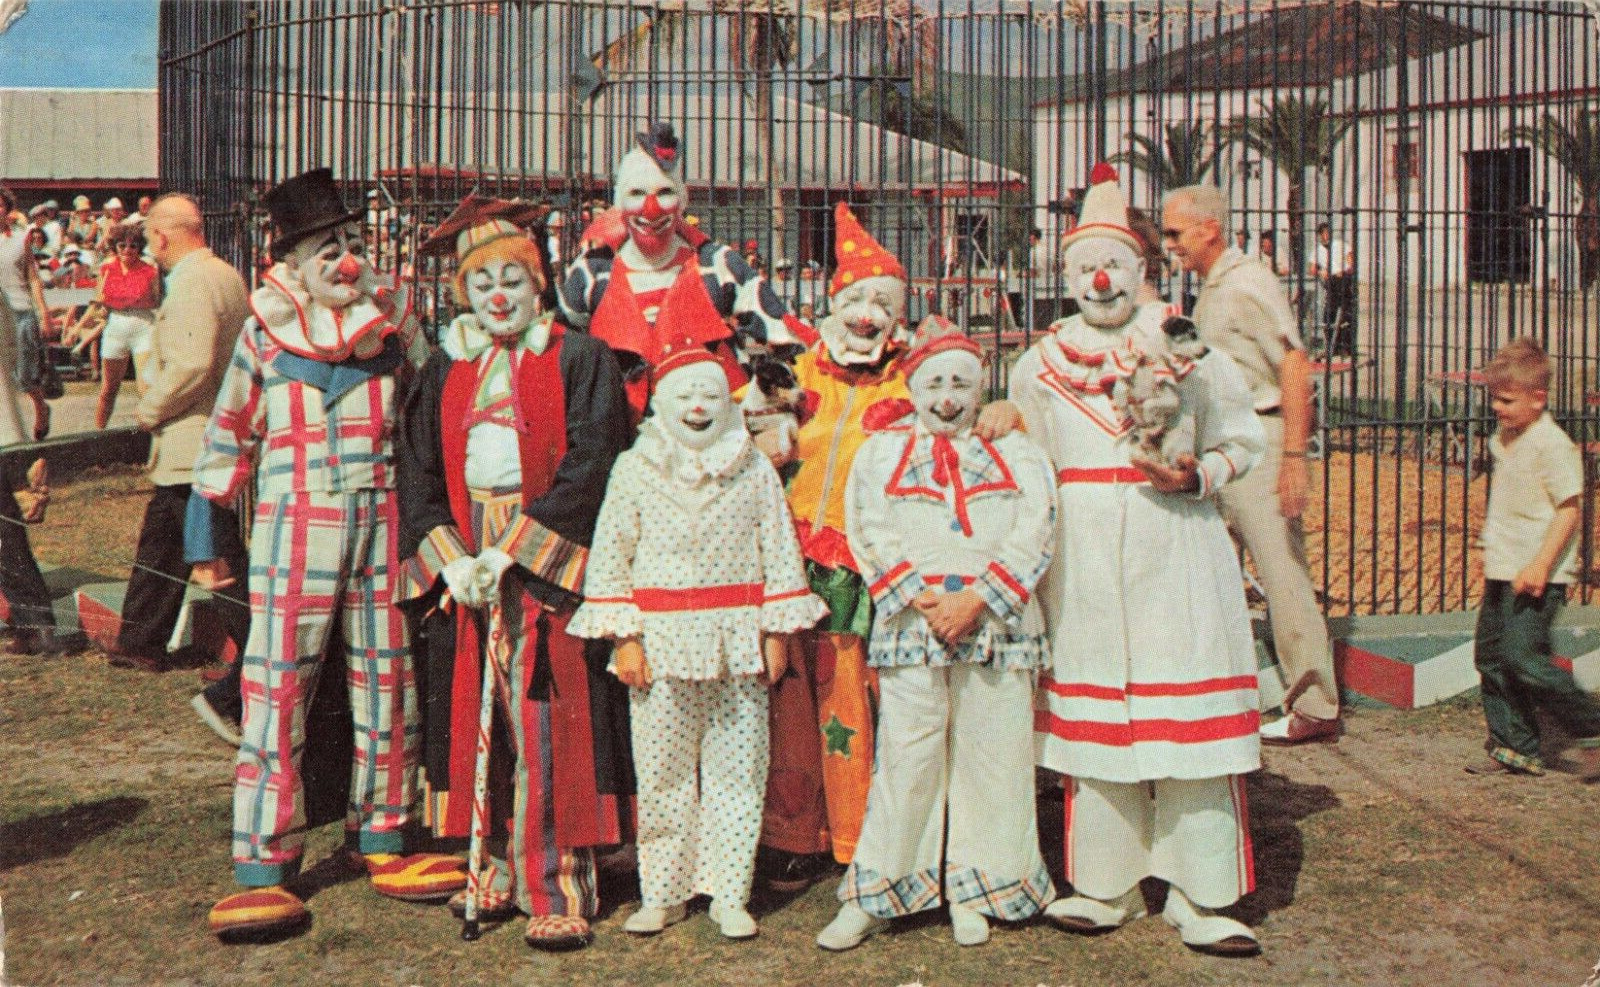 Group of Creepy Happy Clowns in Florida, Vintage Postcard